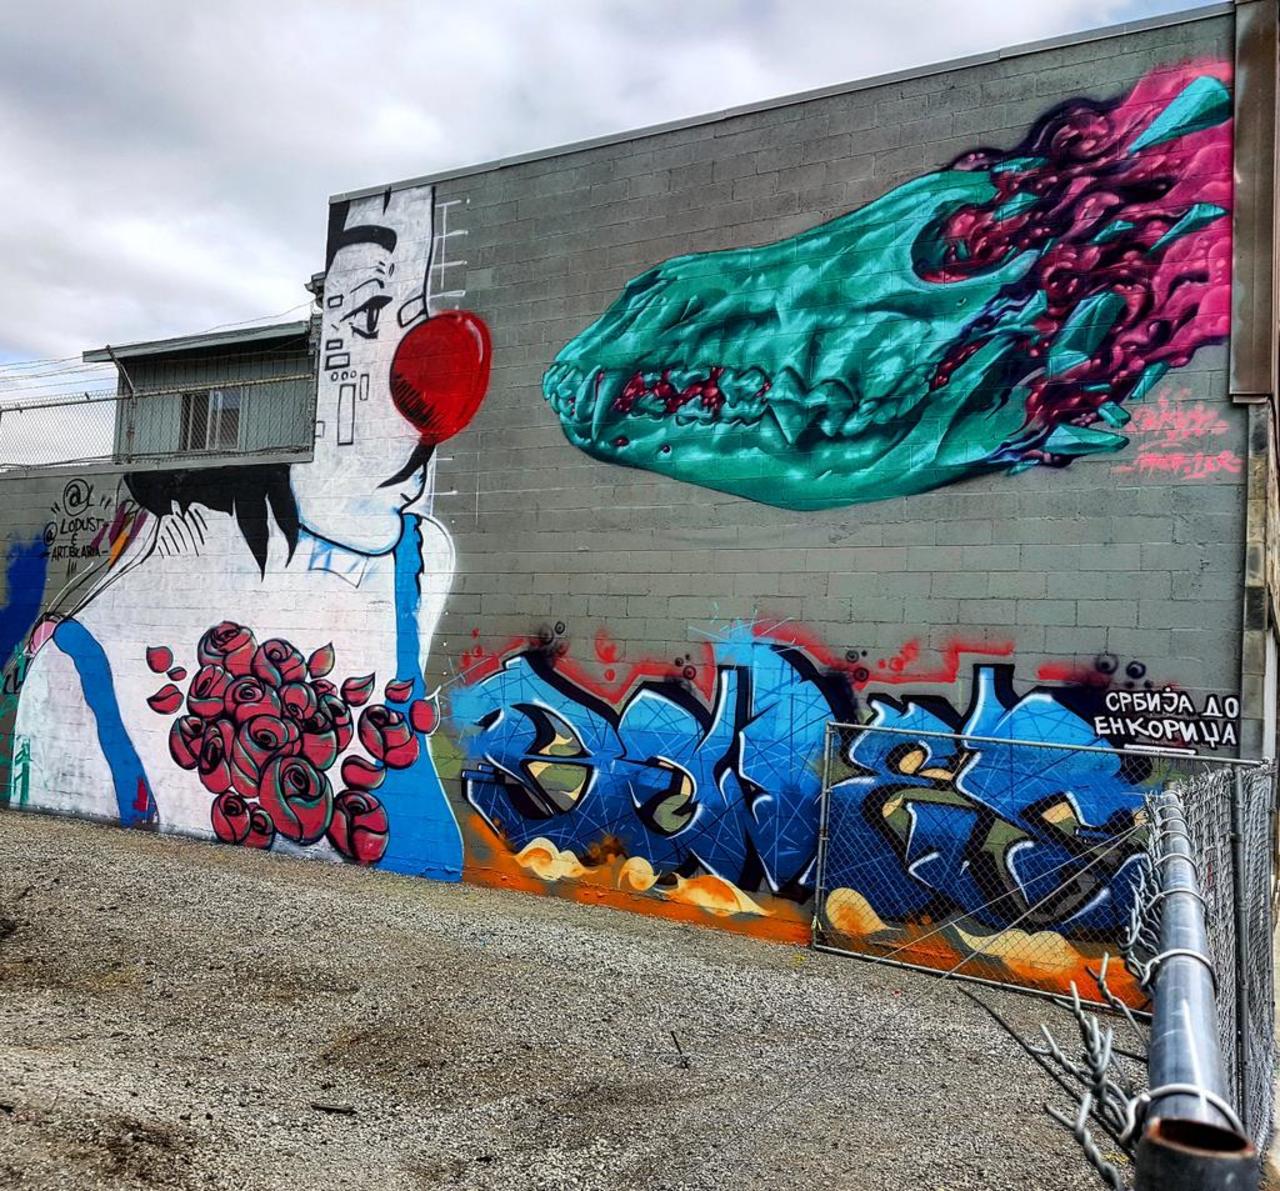 Anchorage #art #streetart #mural #painting #graffiti https://t.co/9mwTE2pgSq